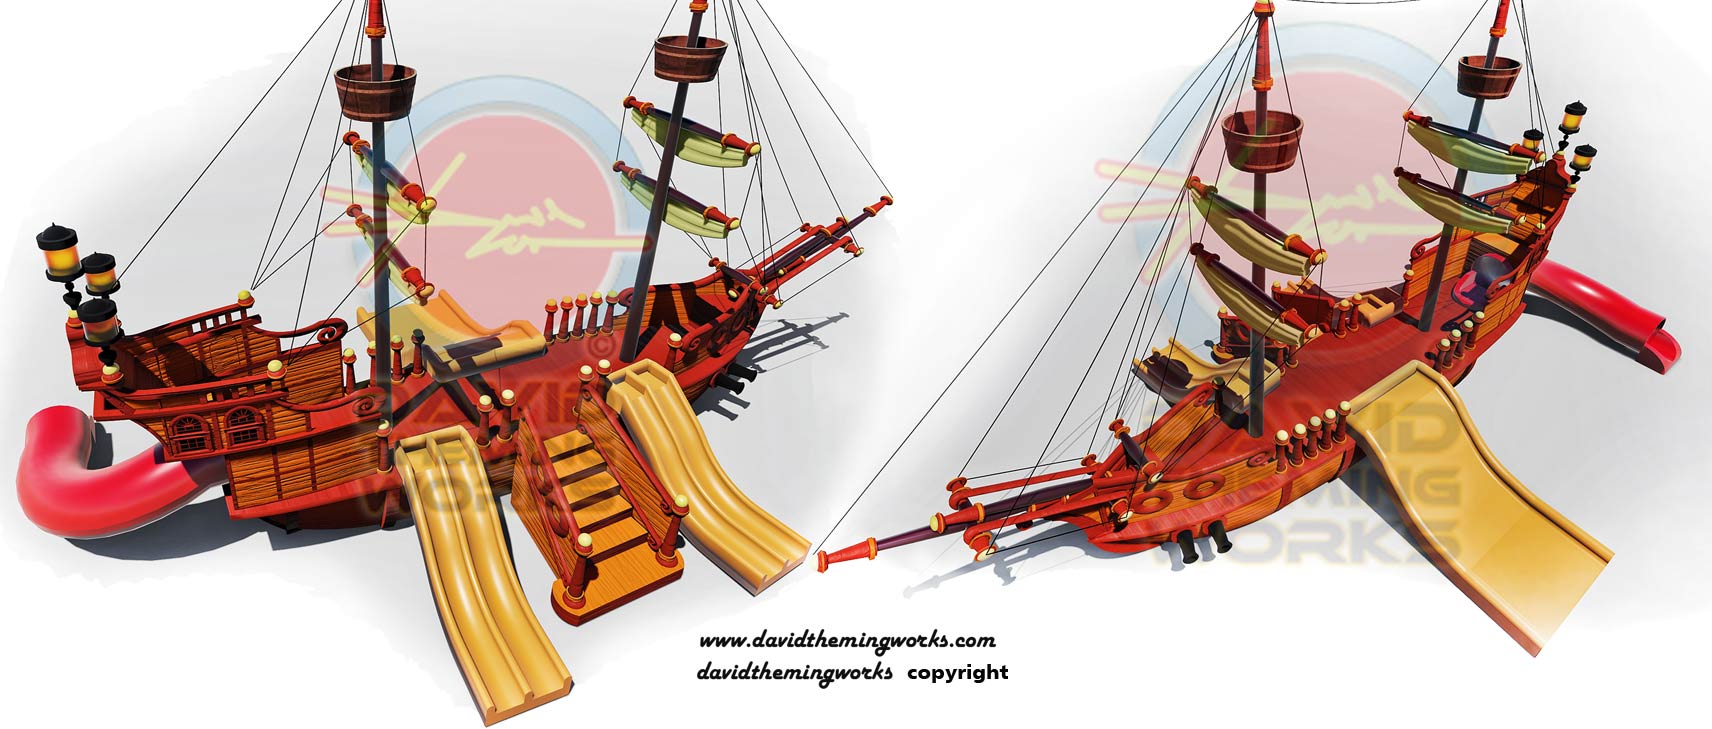 medium  pirate ship for swimming pools, pirate ship with slides for swimming pools, pirate ship with water slides,